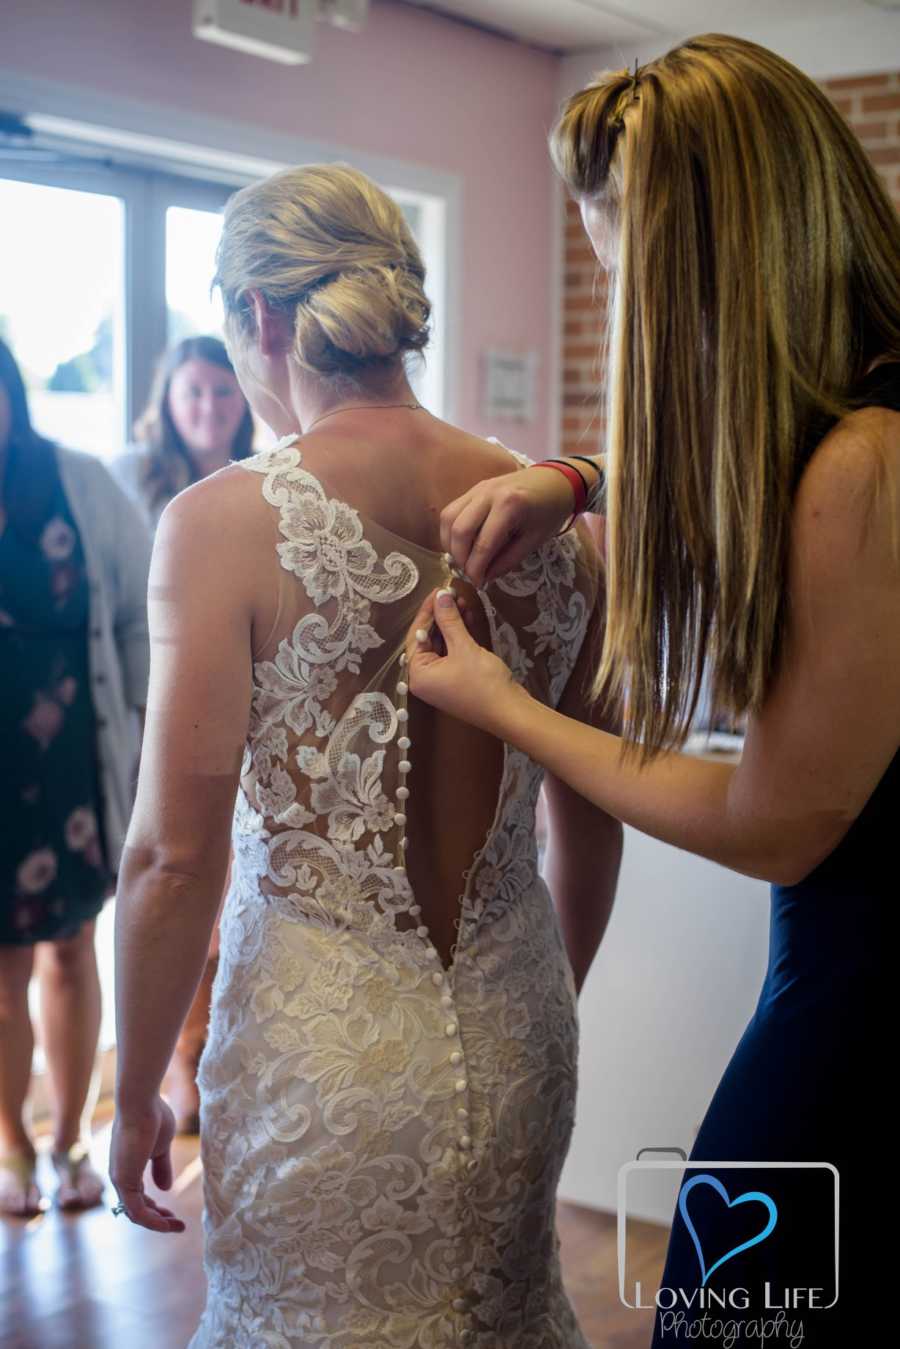 Sister buttons up brides dress 